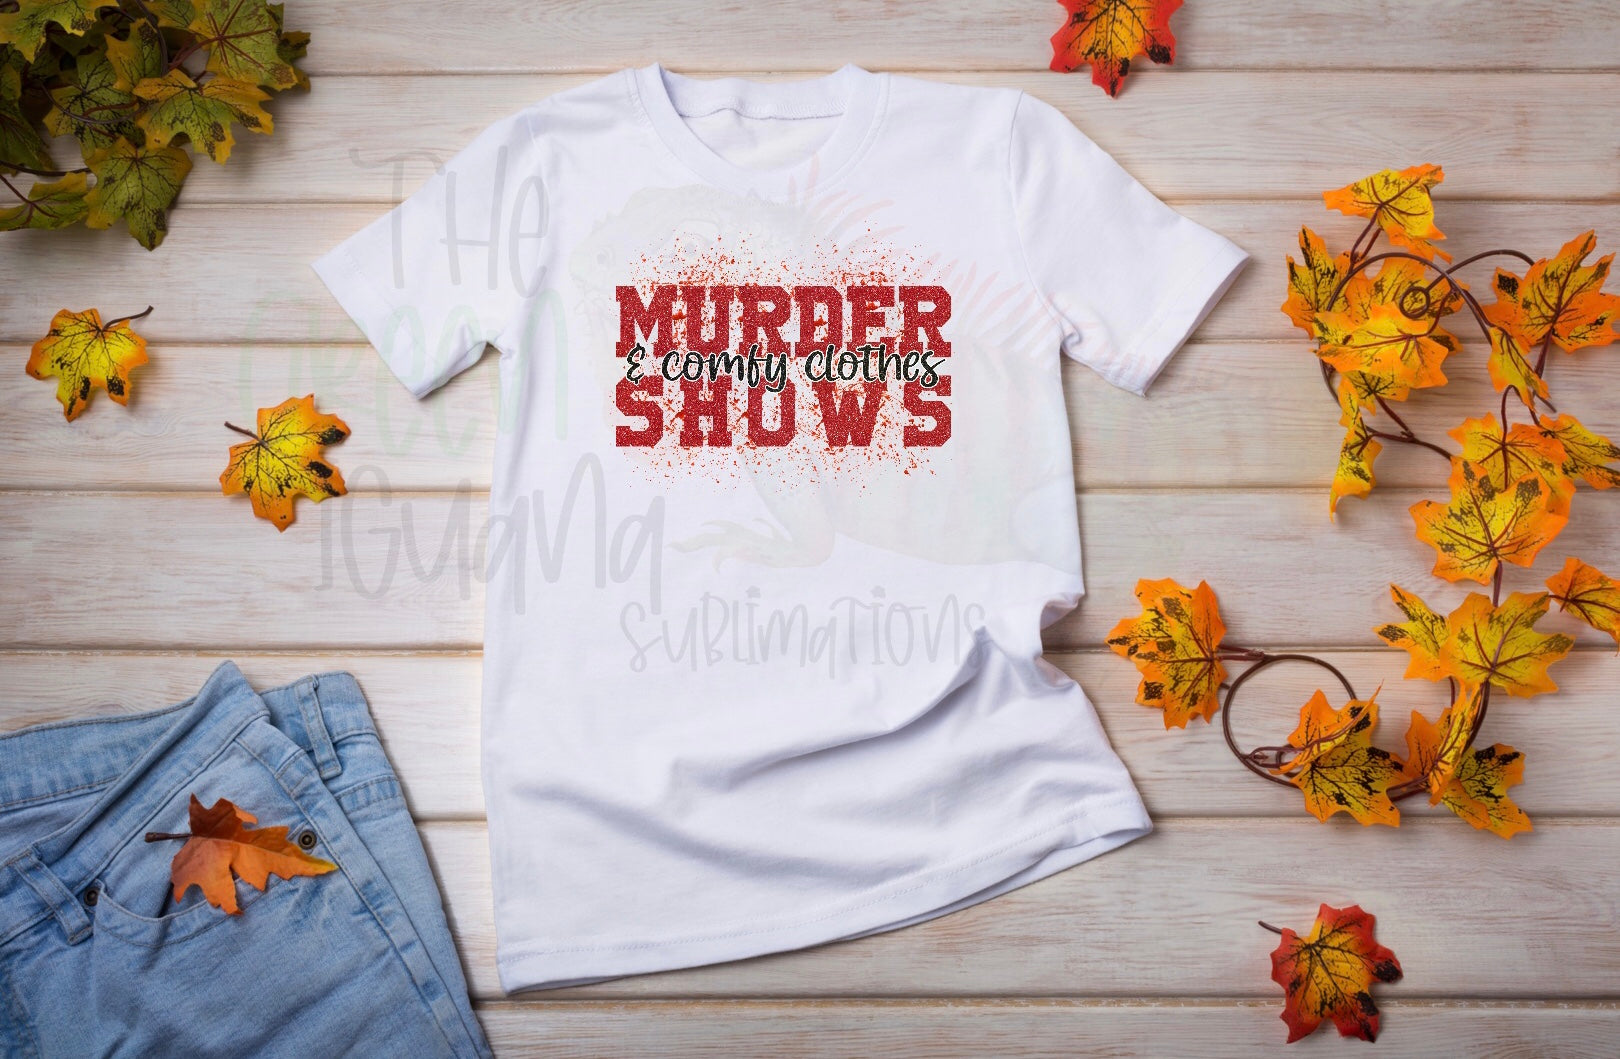 Murder shows & comfy clothes